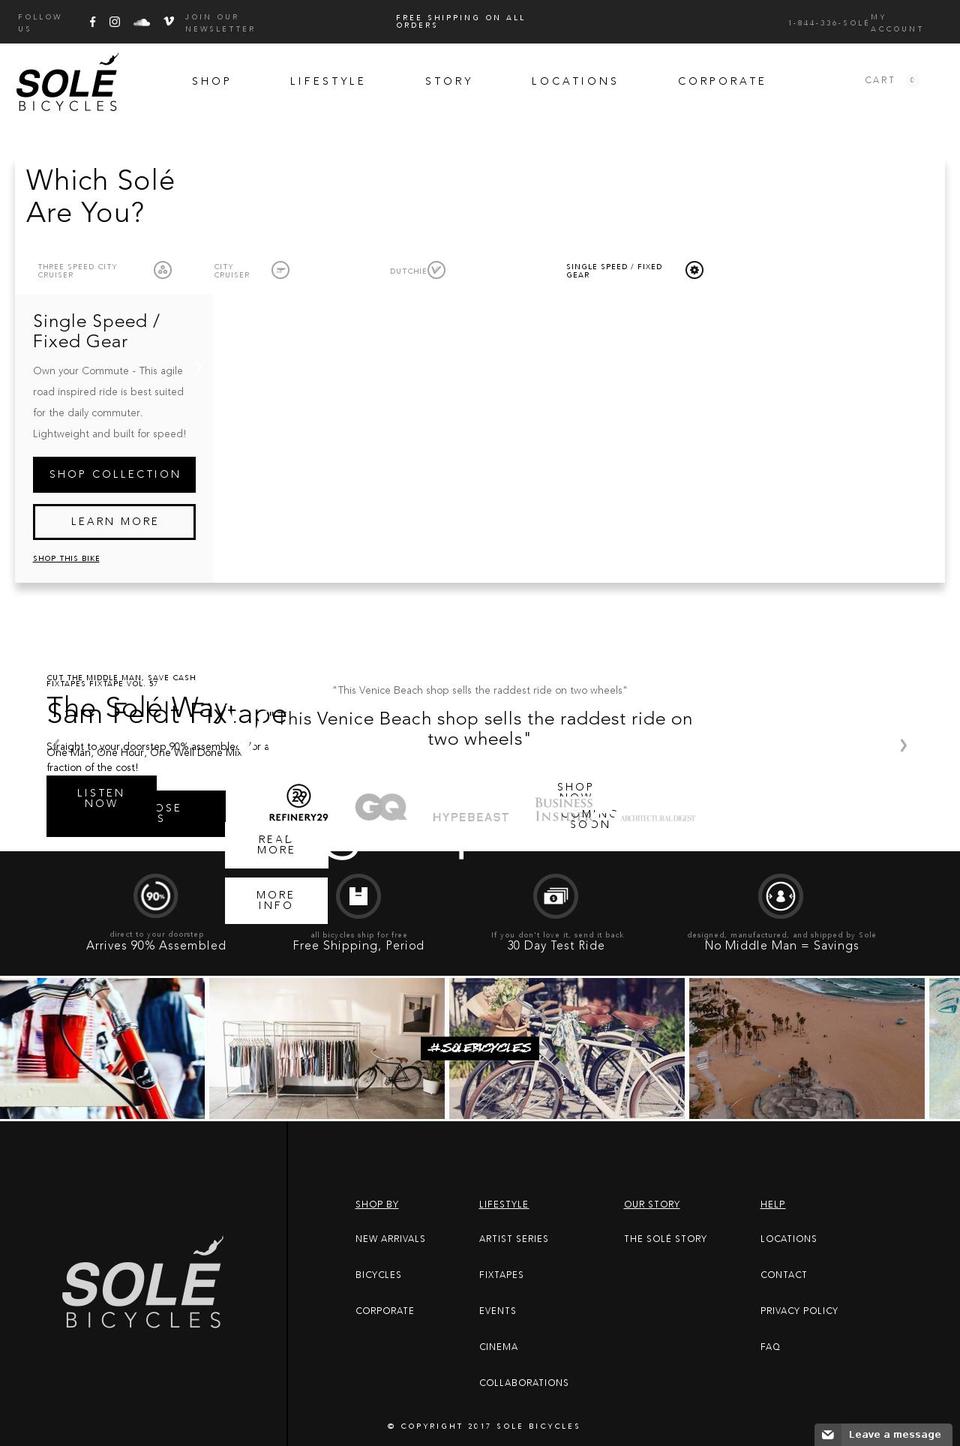 solebicycles.com shopify website screenshot